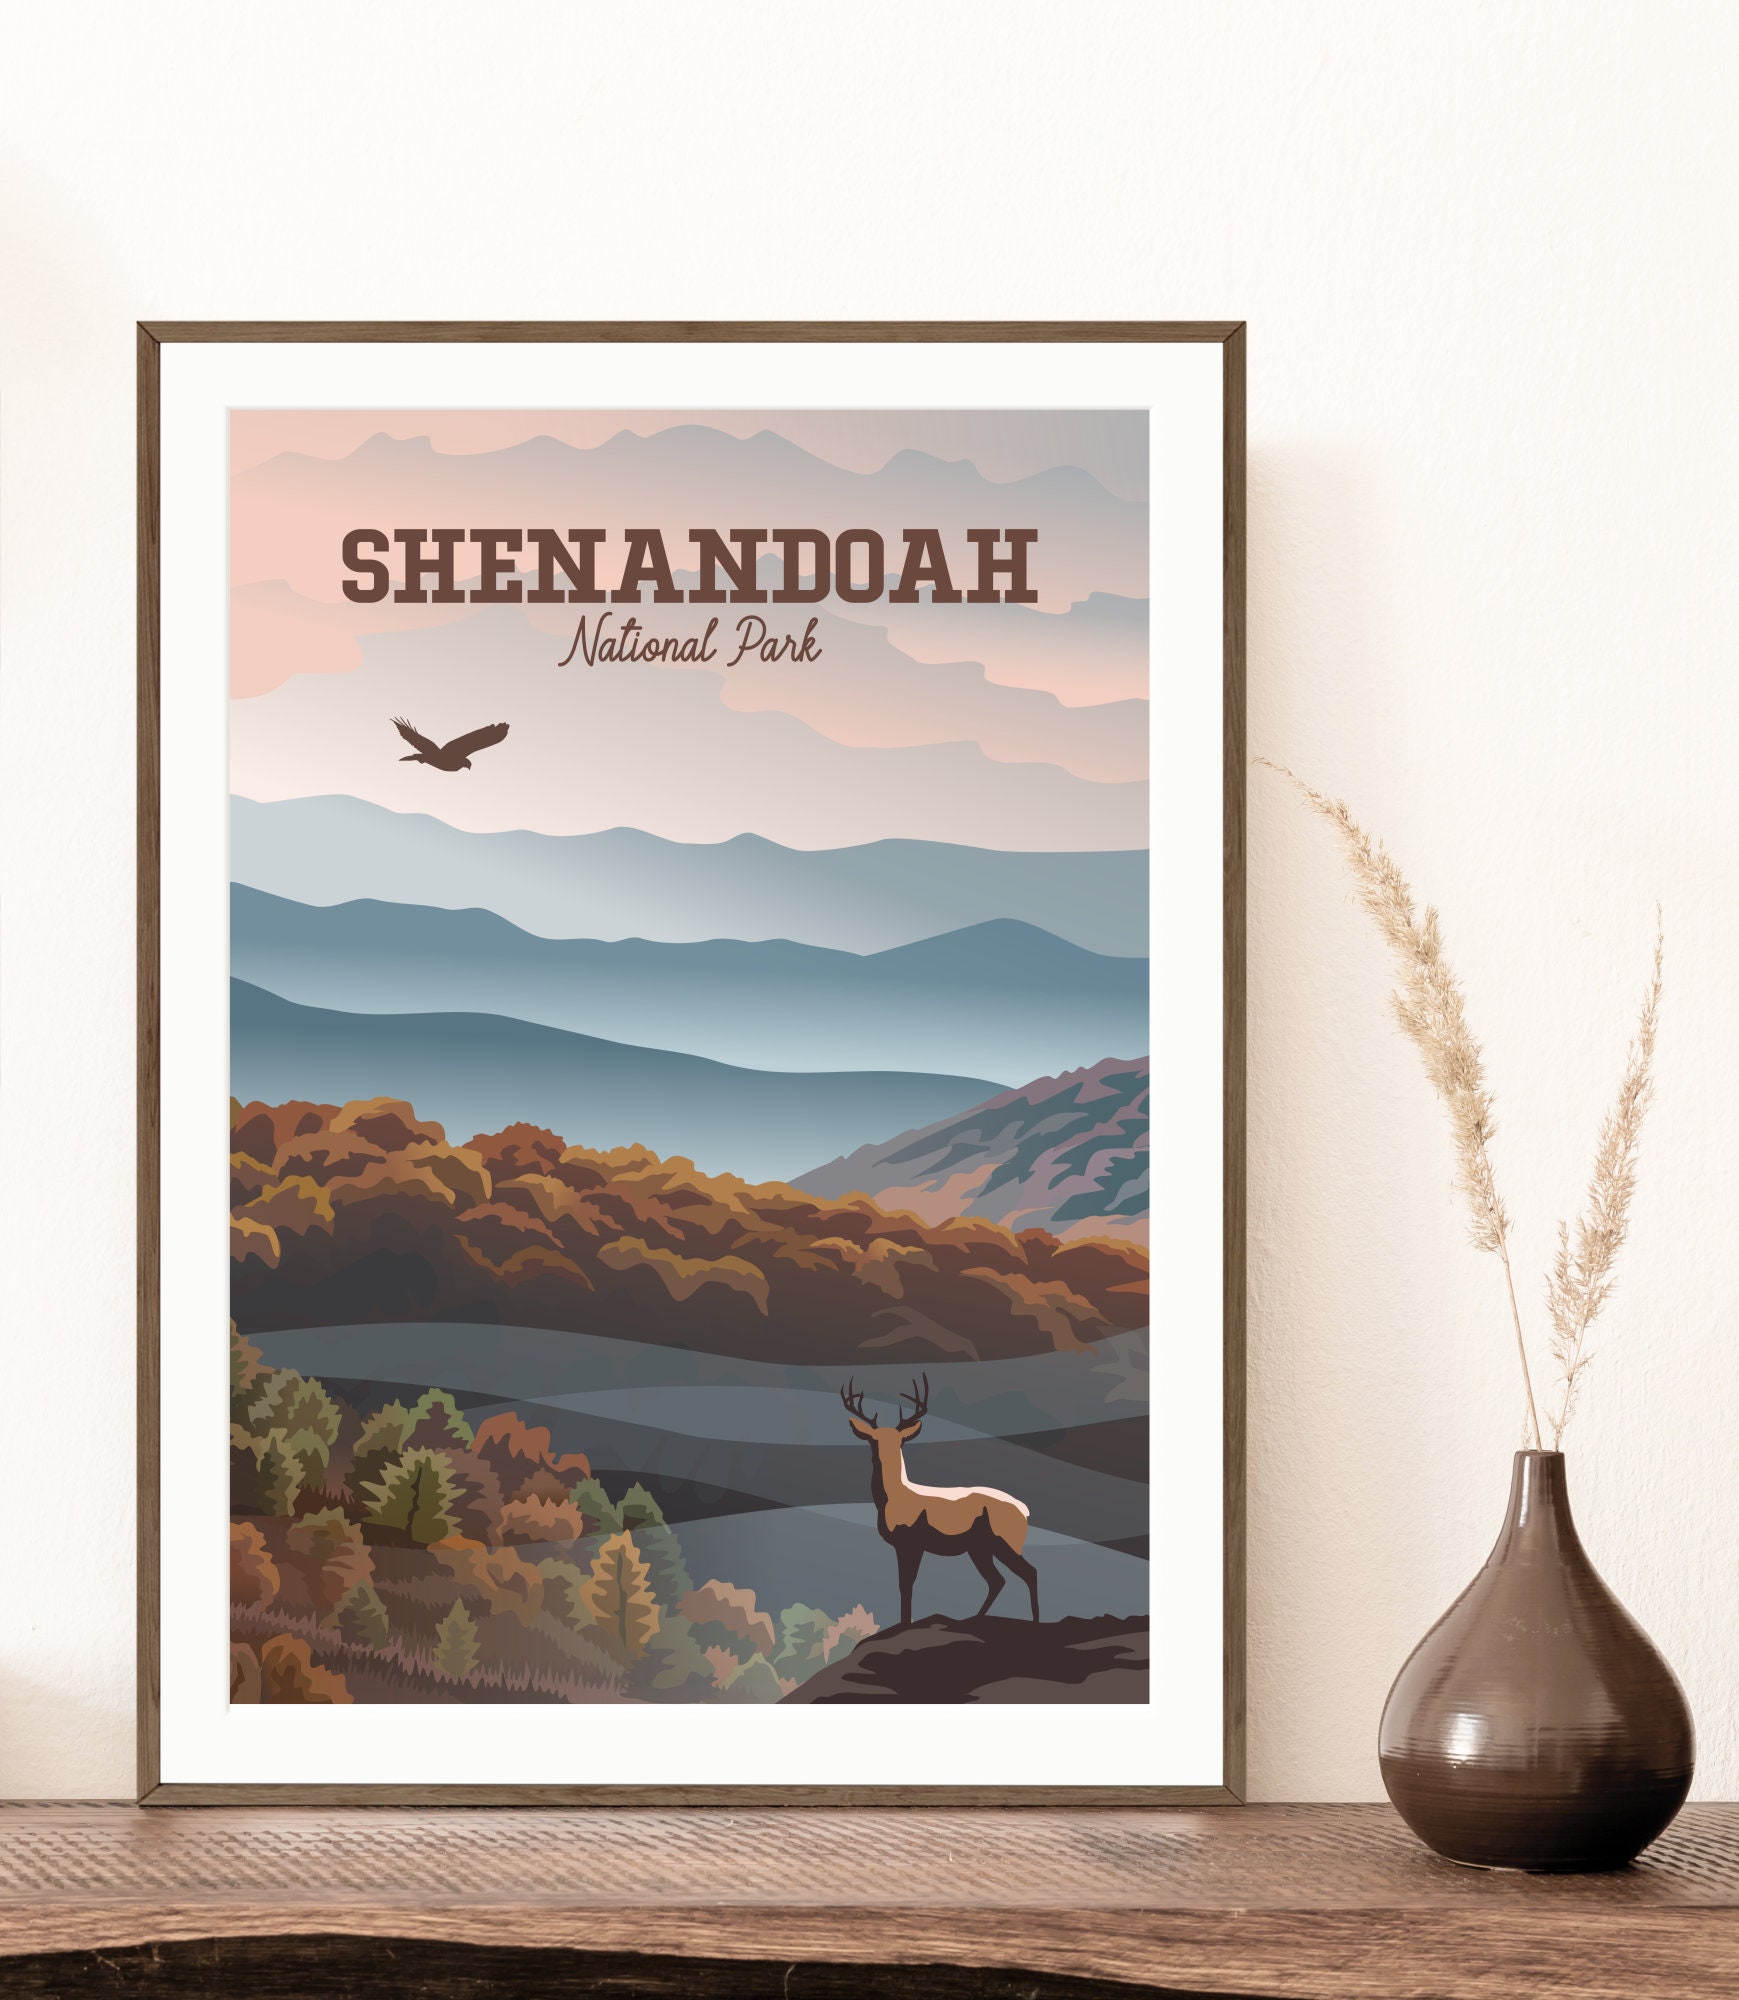 Shenandoah National Park Poster Blue Ridge Mountains image